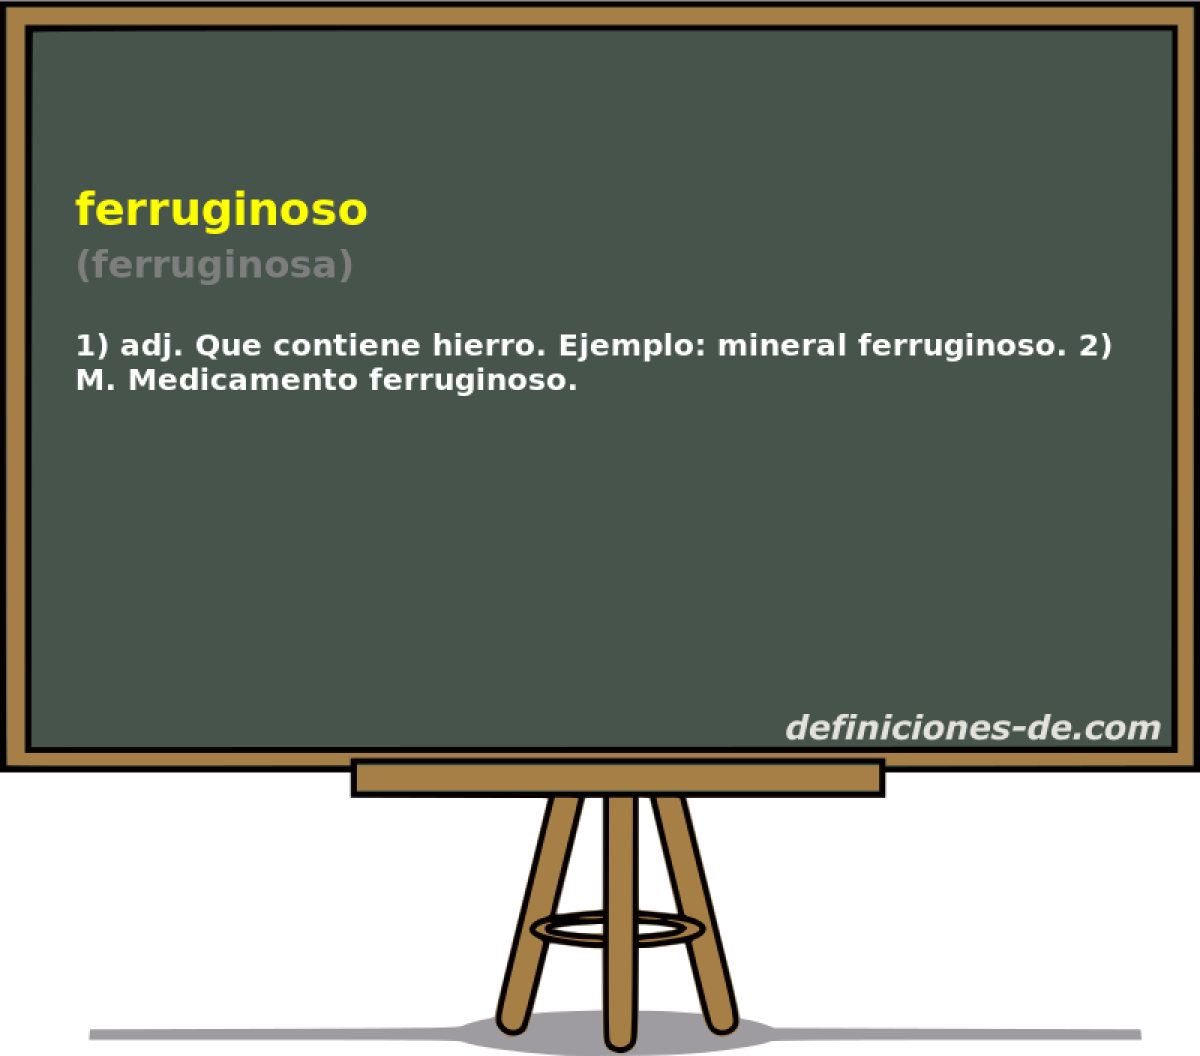 ferruginoso (ferruginosa)